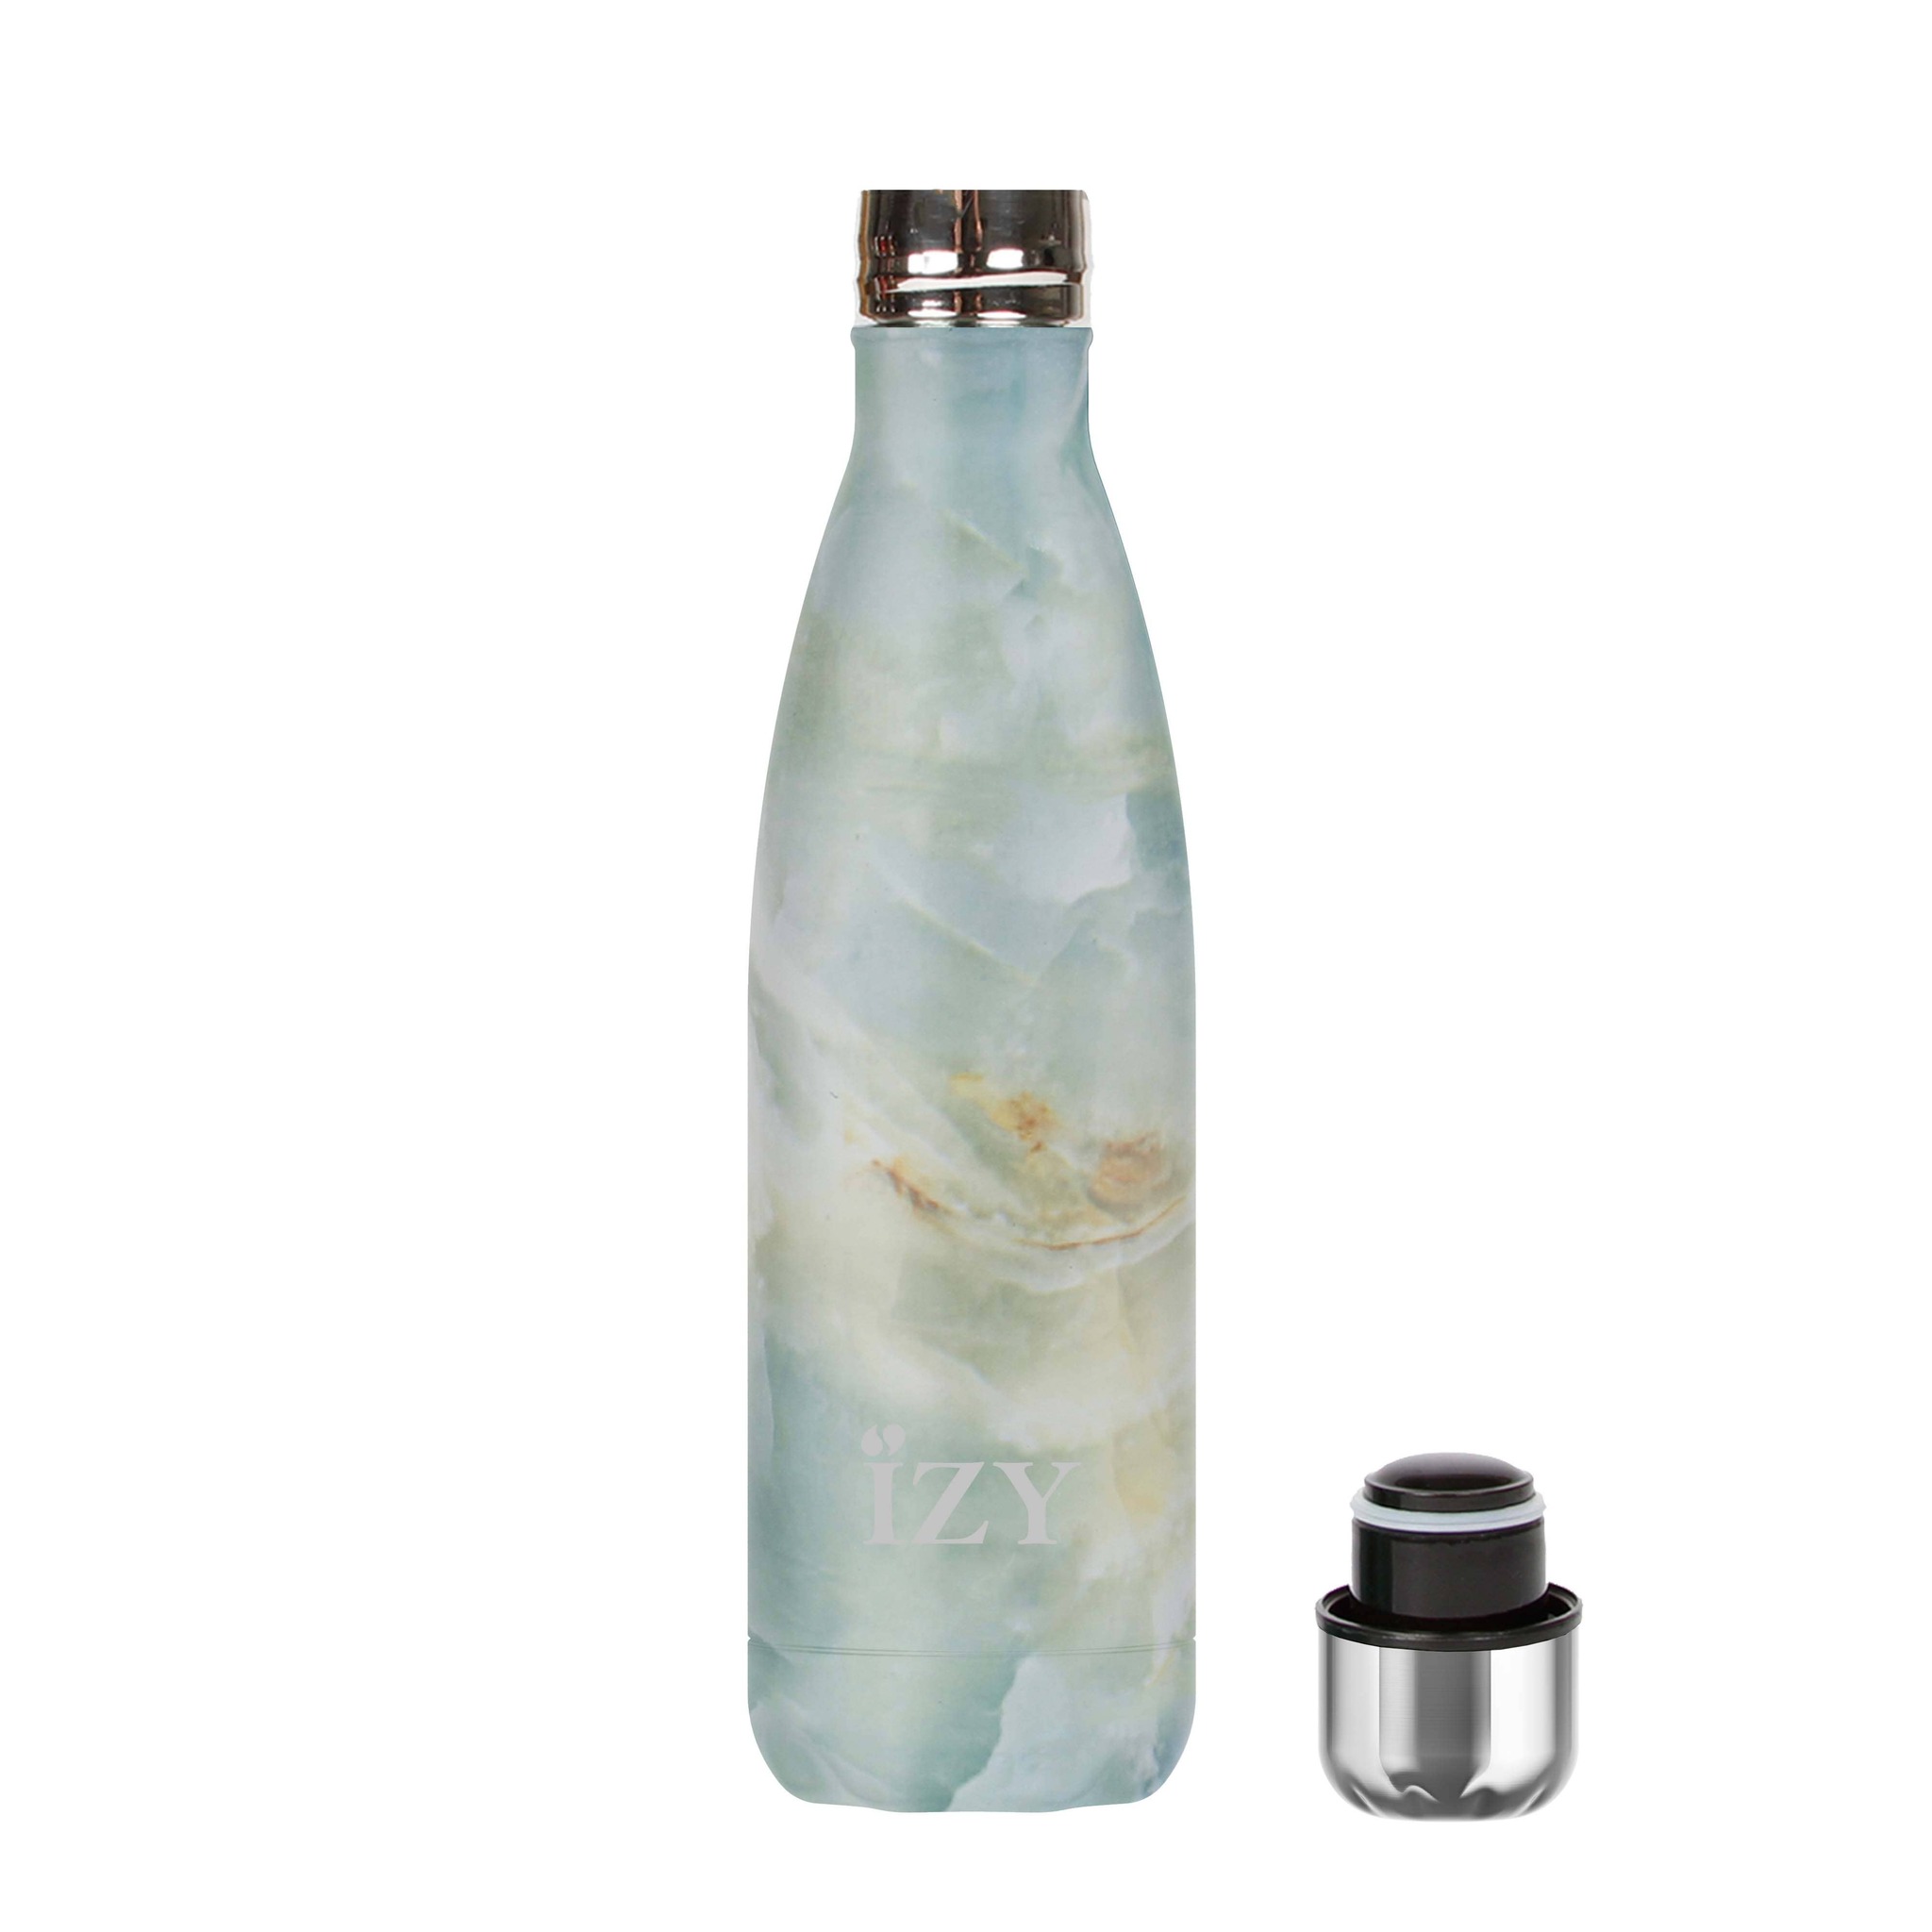 IZY Insulated Bottle - Marbel Green  - 500ML